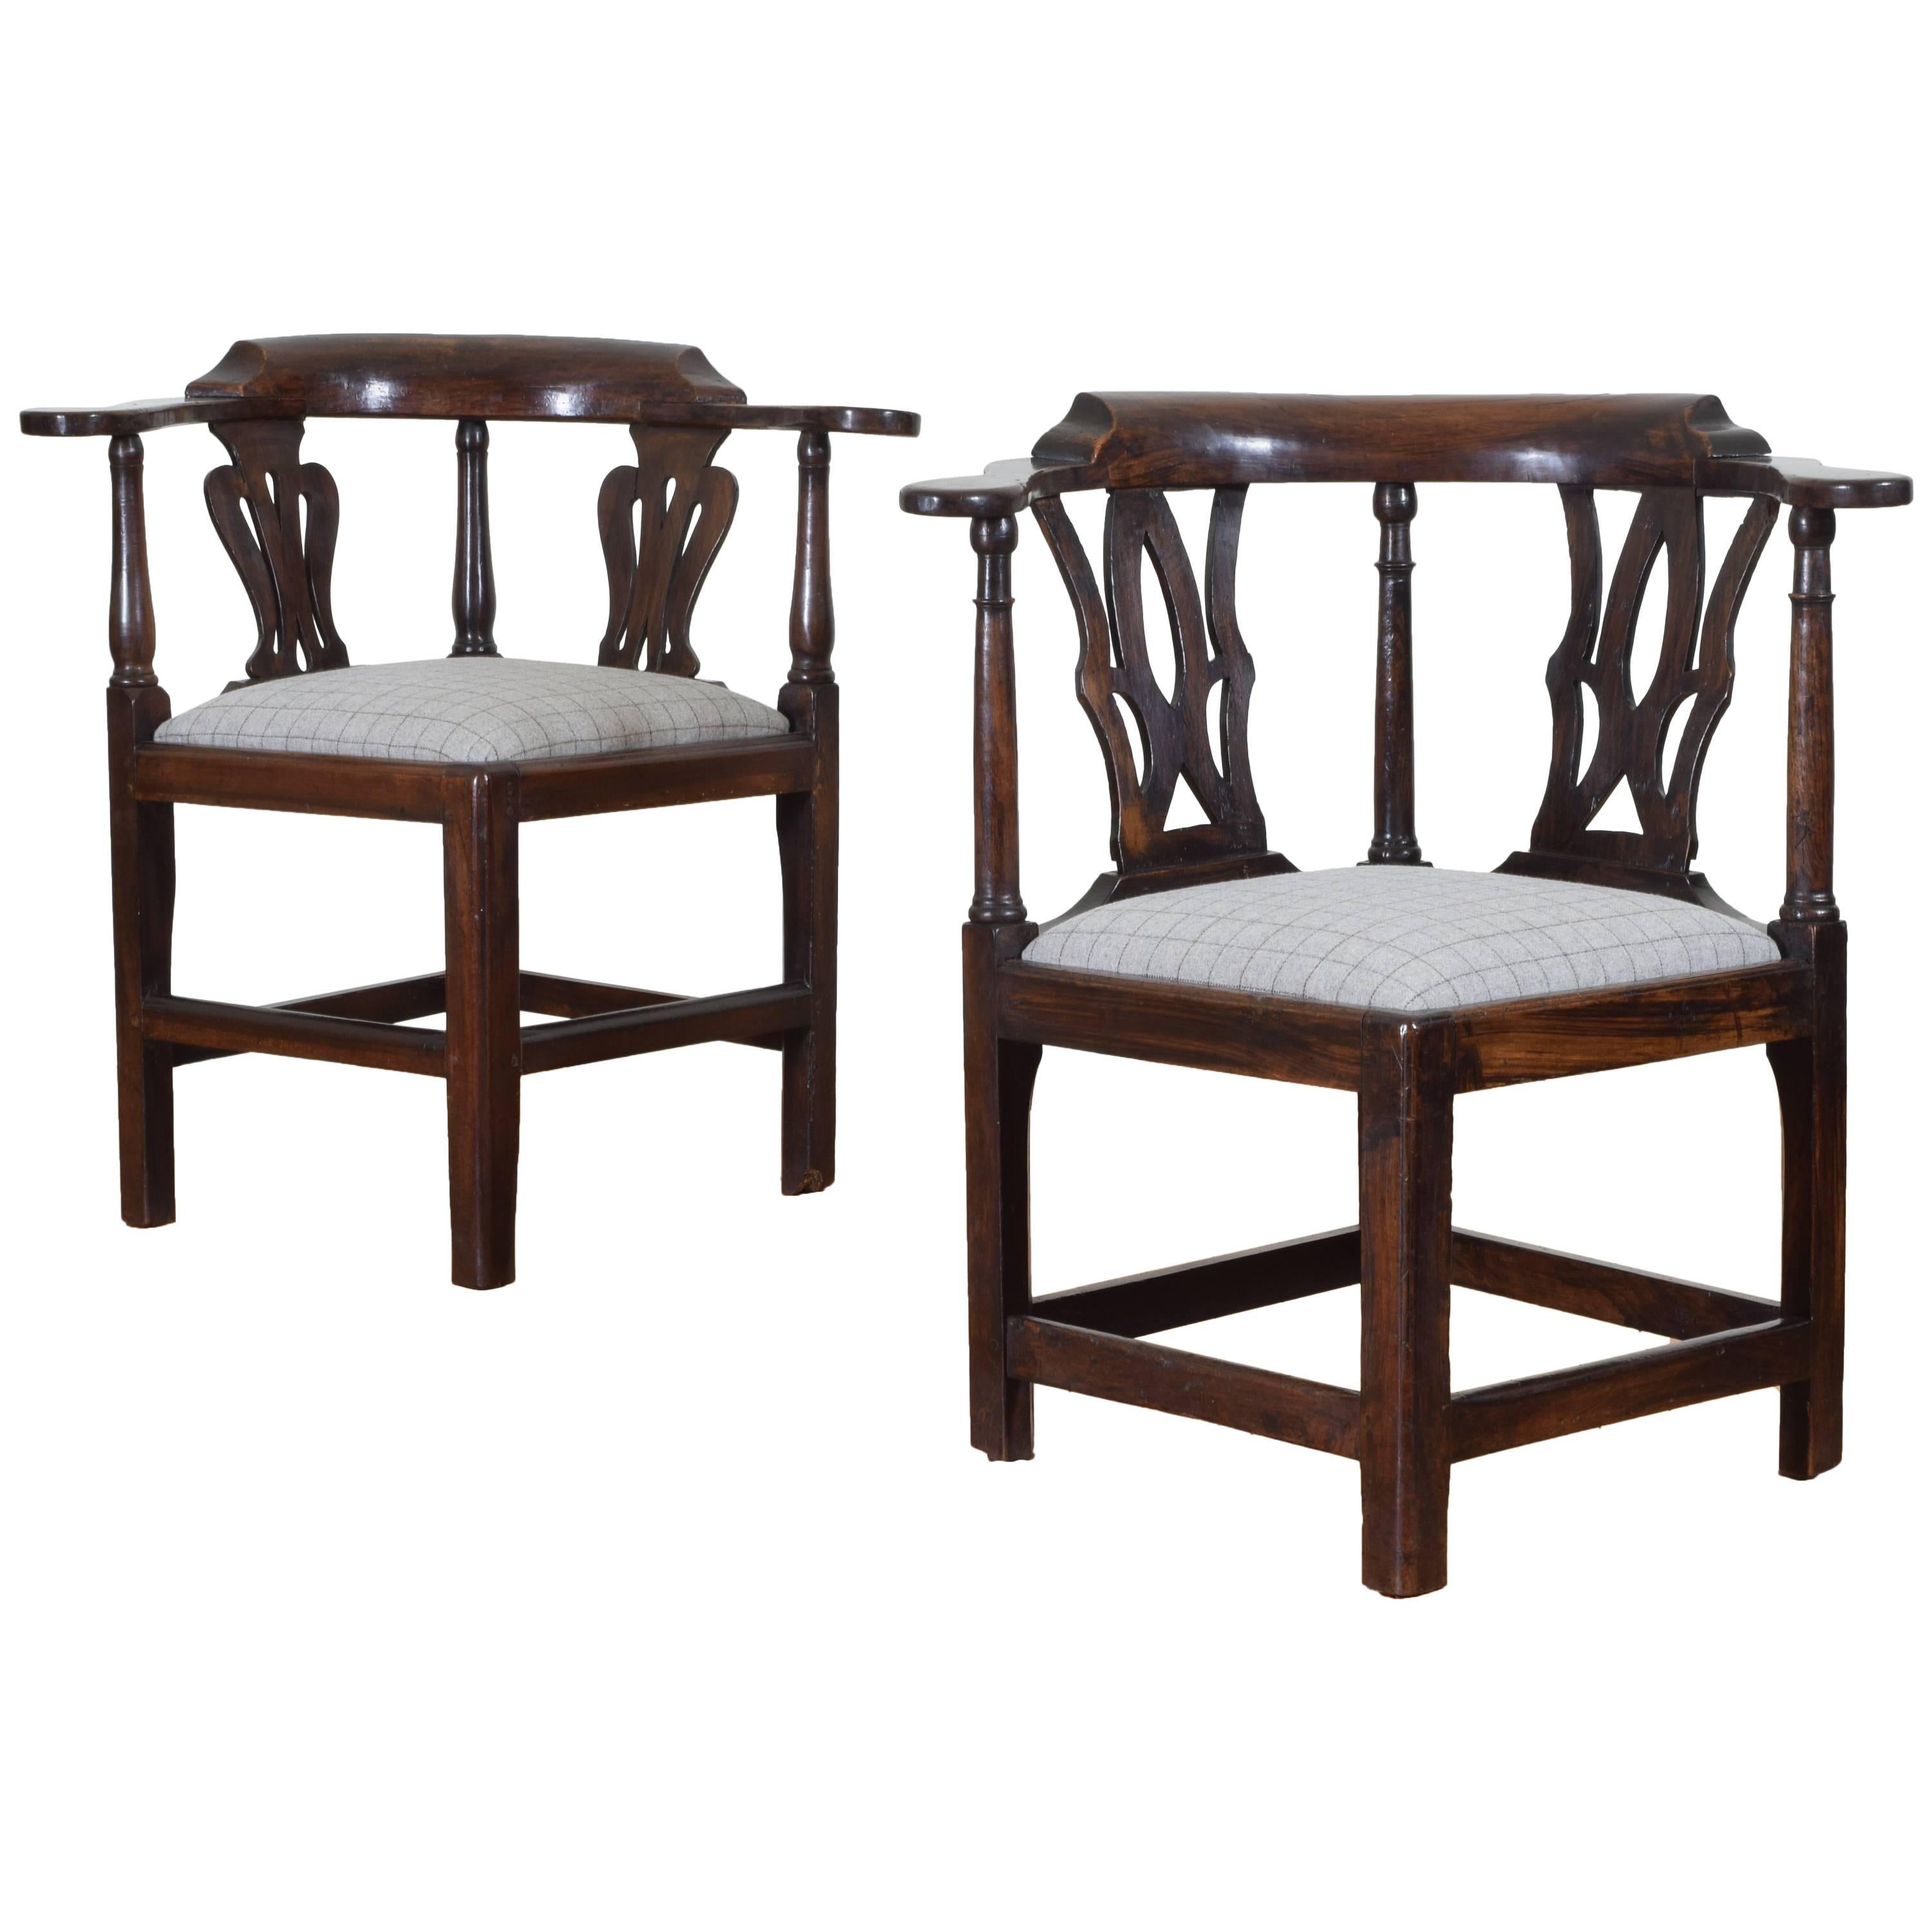 Near Pair of George III Walnut Corner Chairs, Late 18th Century